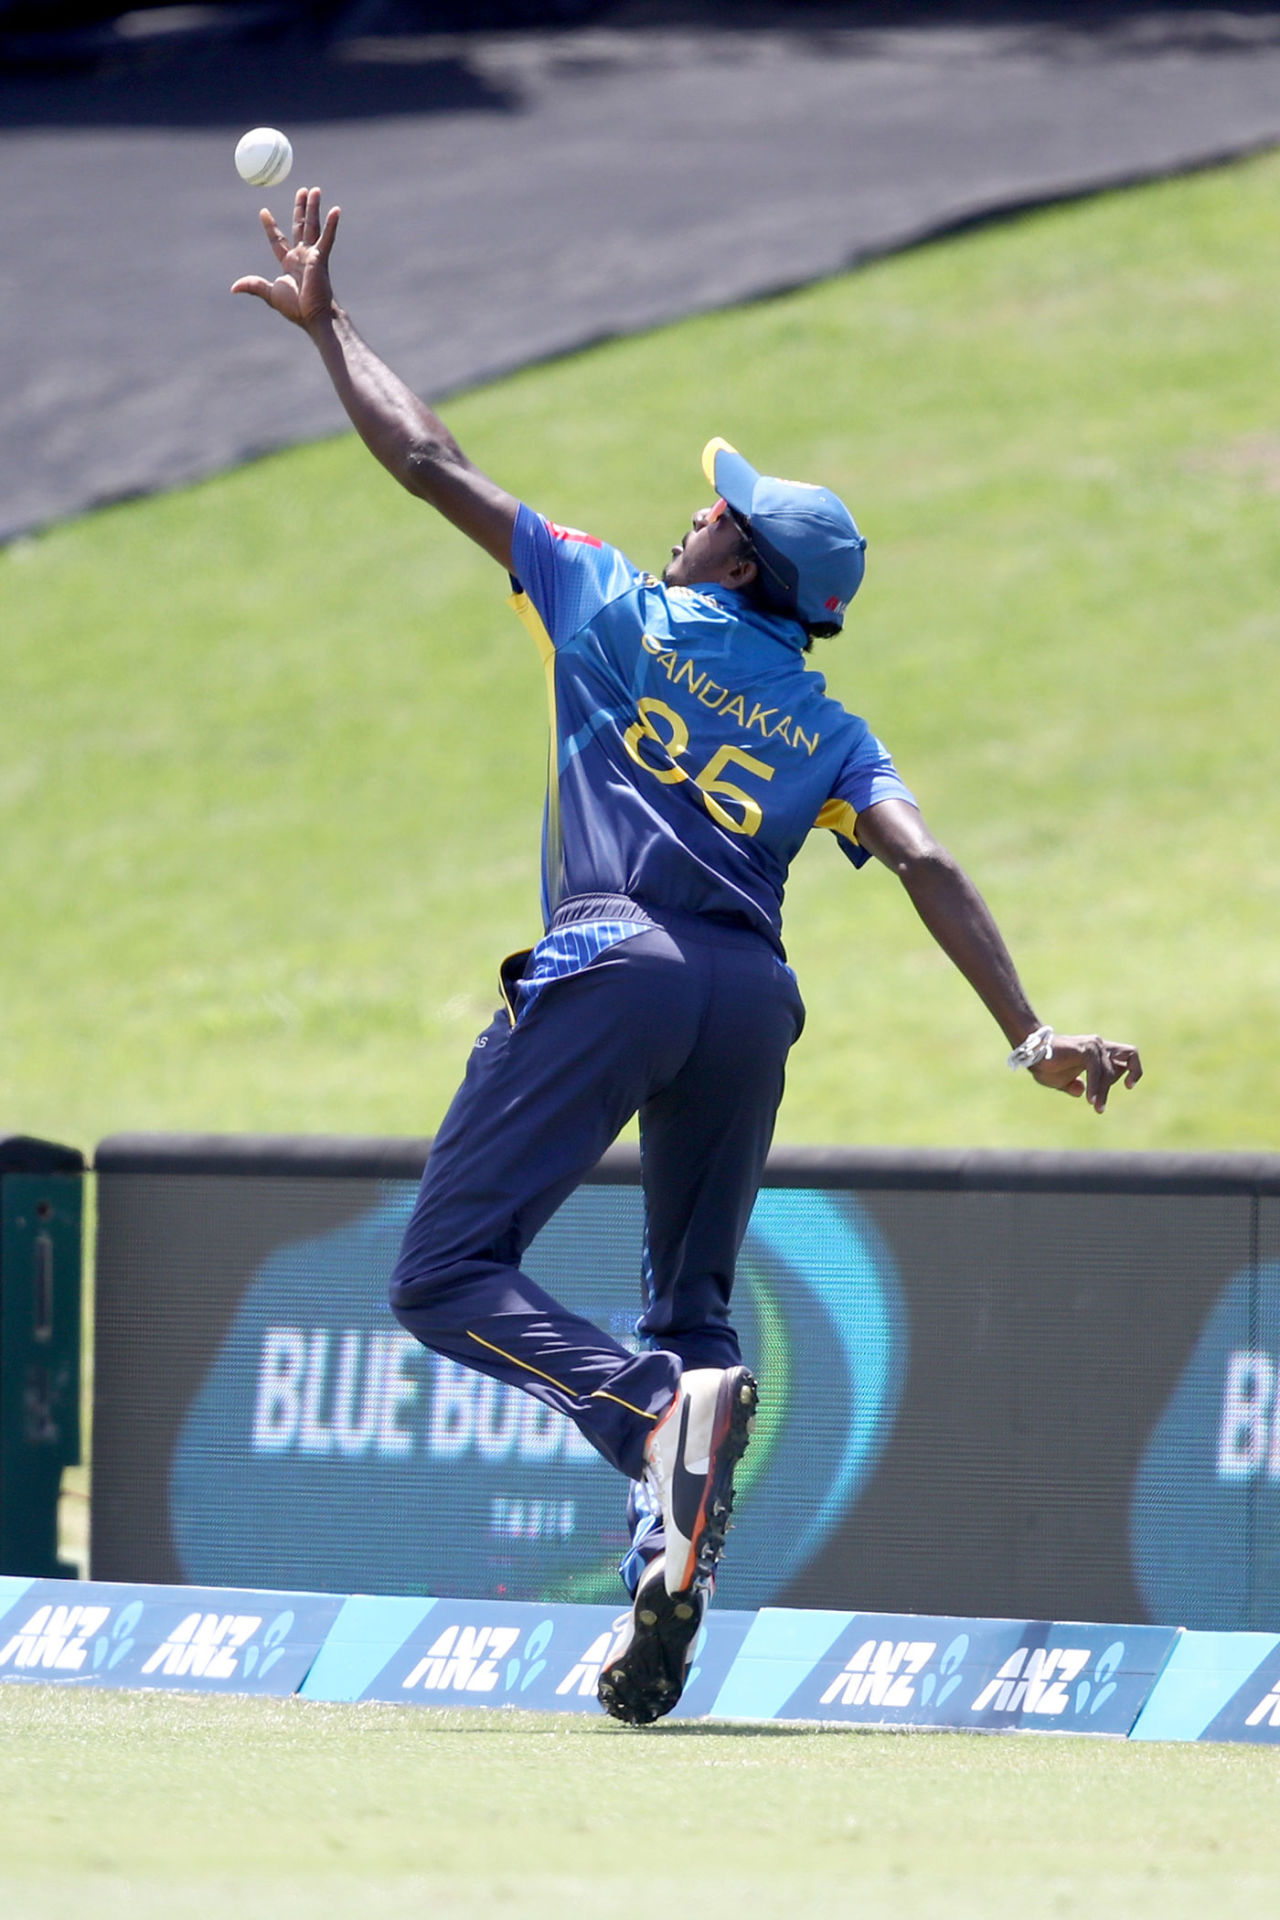 Lakshan Sandakan flicks the ball back into play before completing a catch, New Zealand v Sri Lanka, 2nd ODI, Mount Maunganui